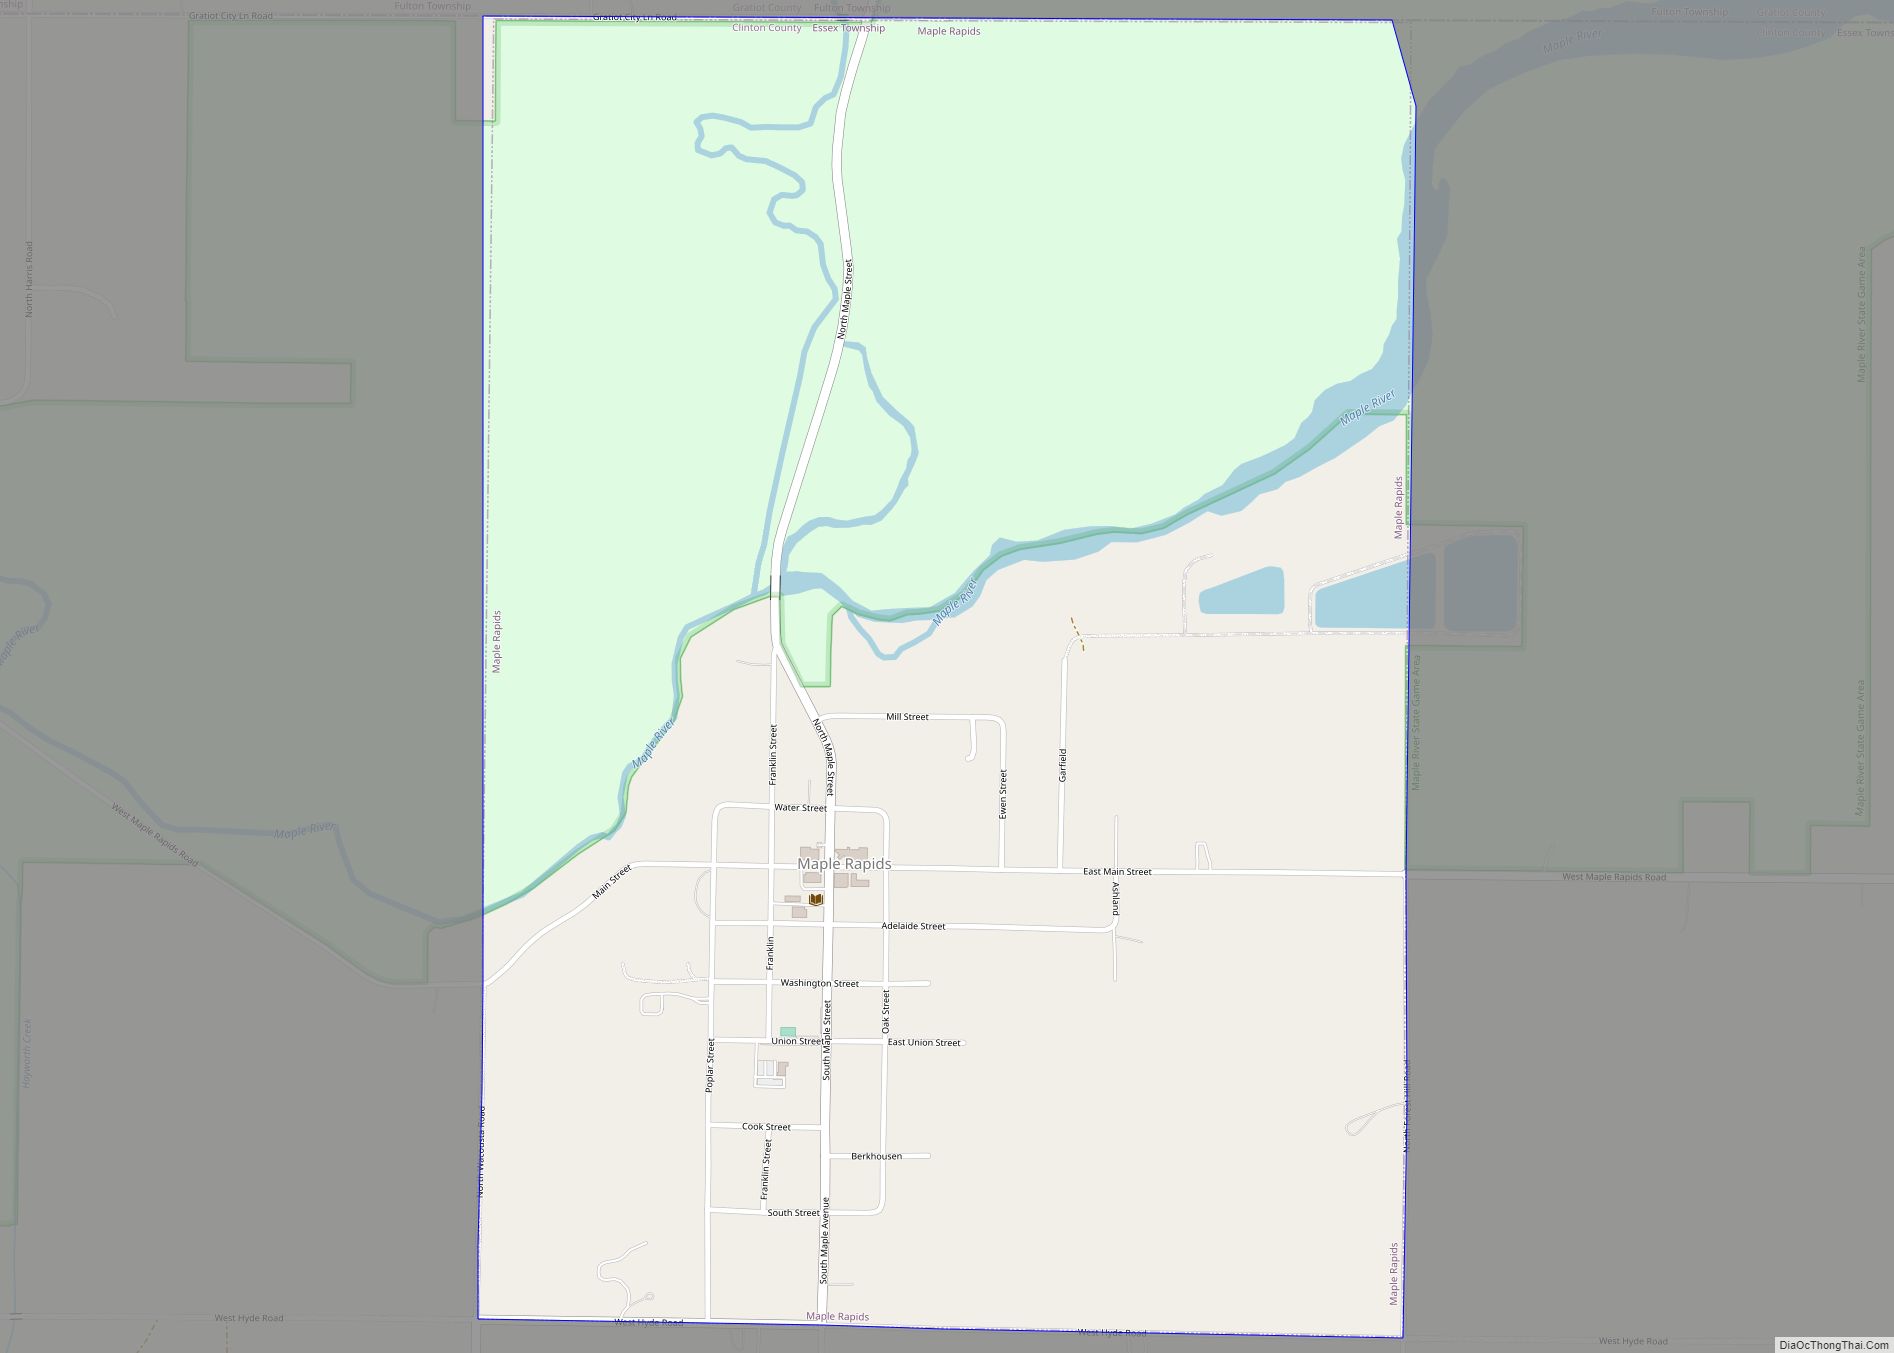 Map of Maple Rapids village